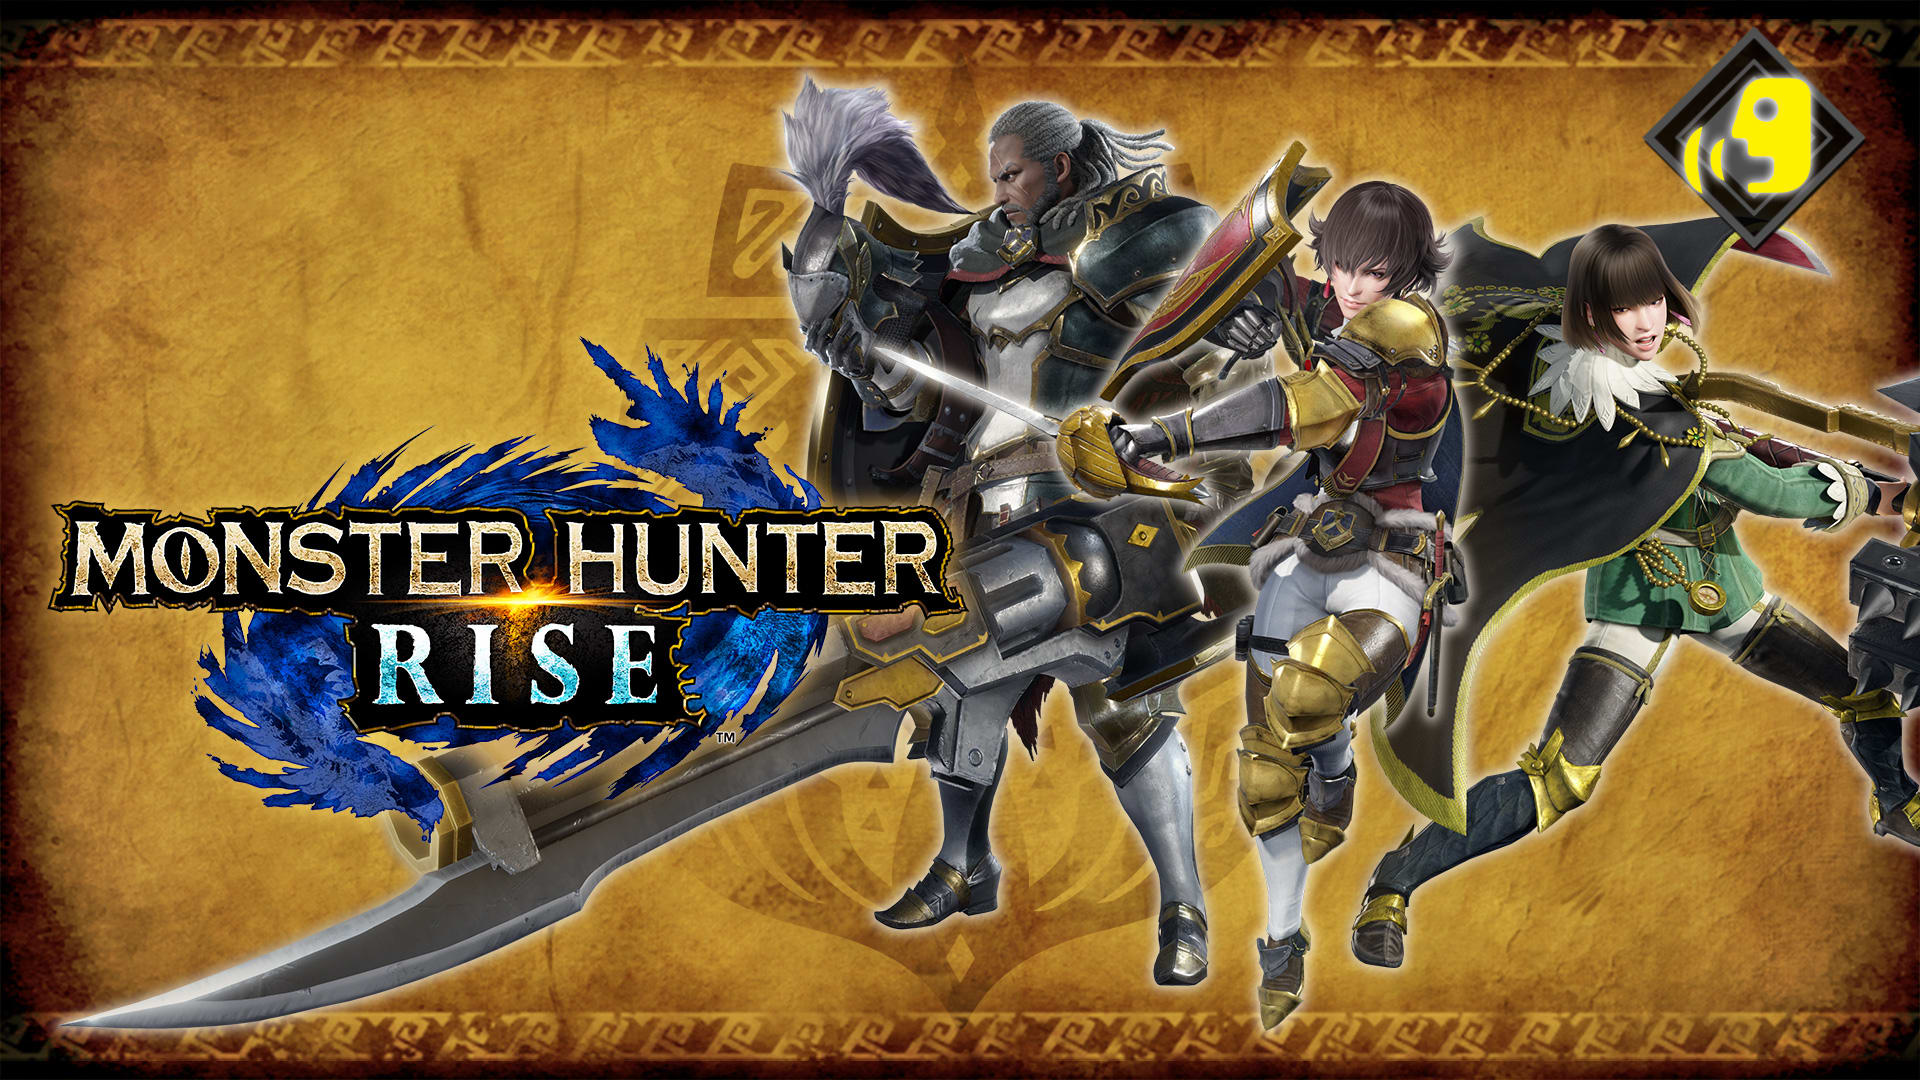 Monster Hunter Rise "Kingdom Collection" DLC Pack